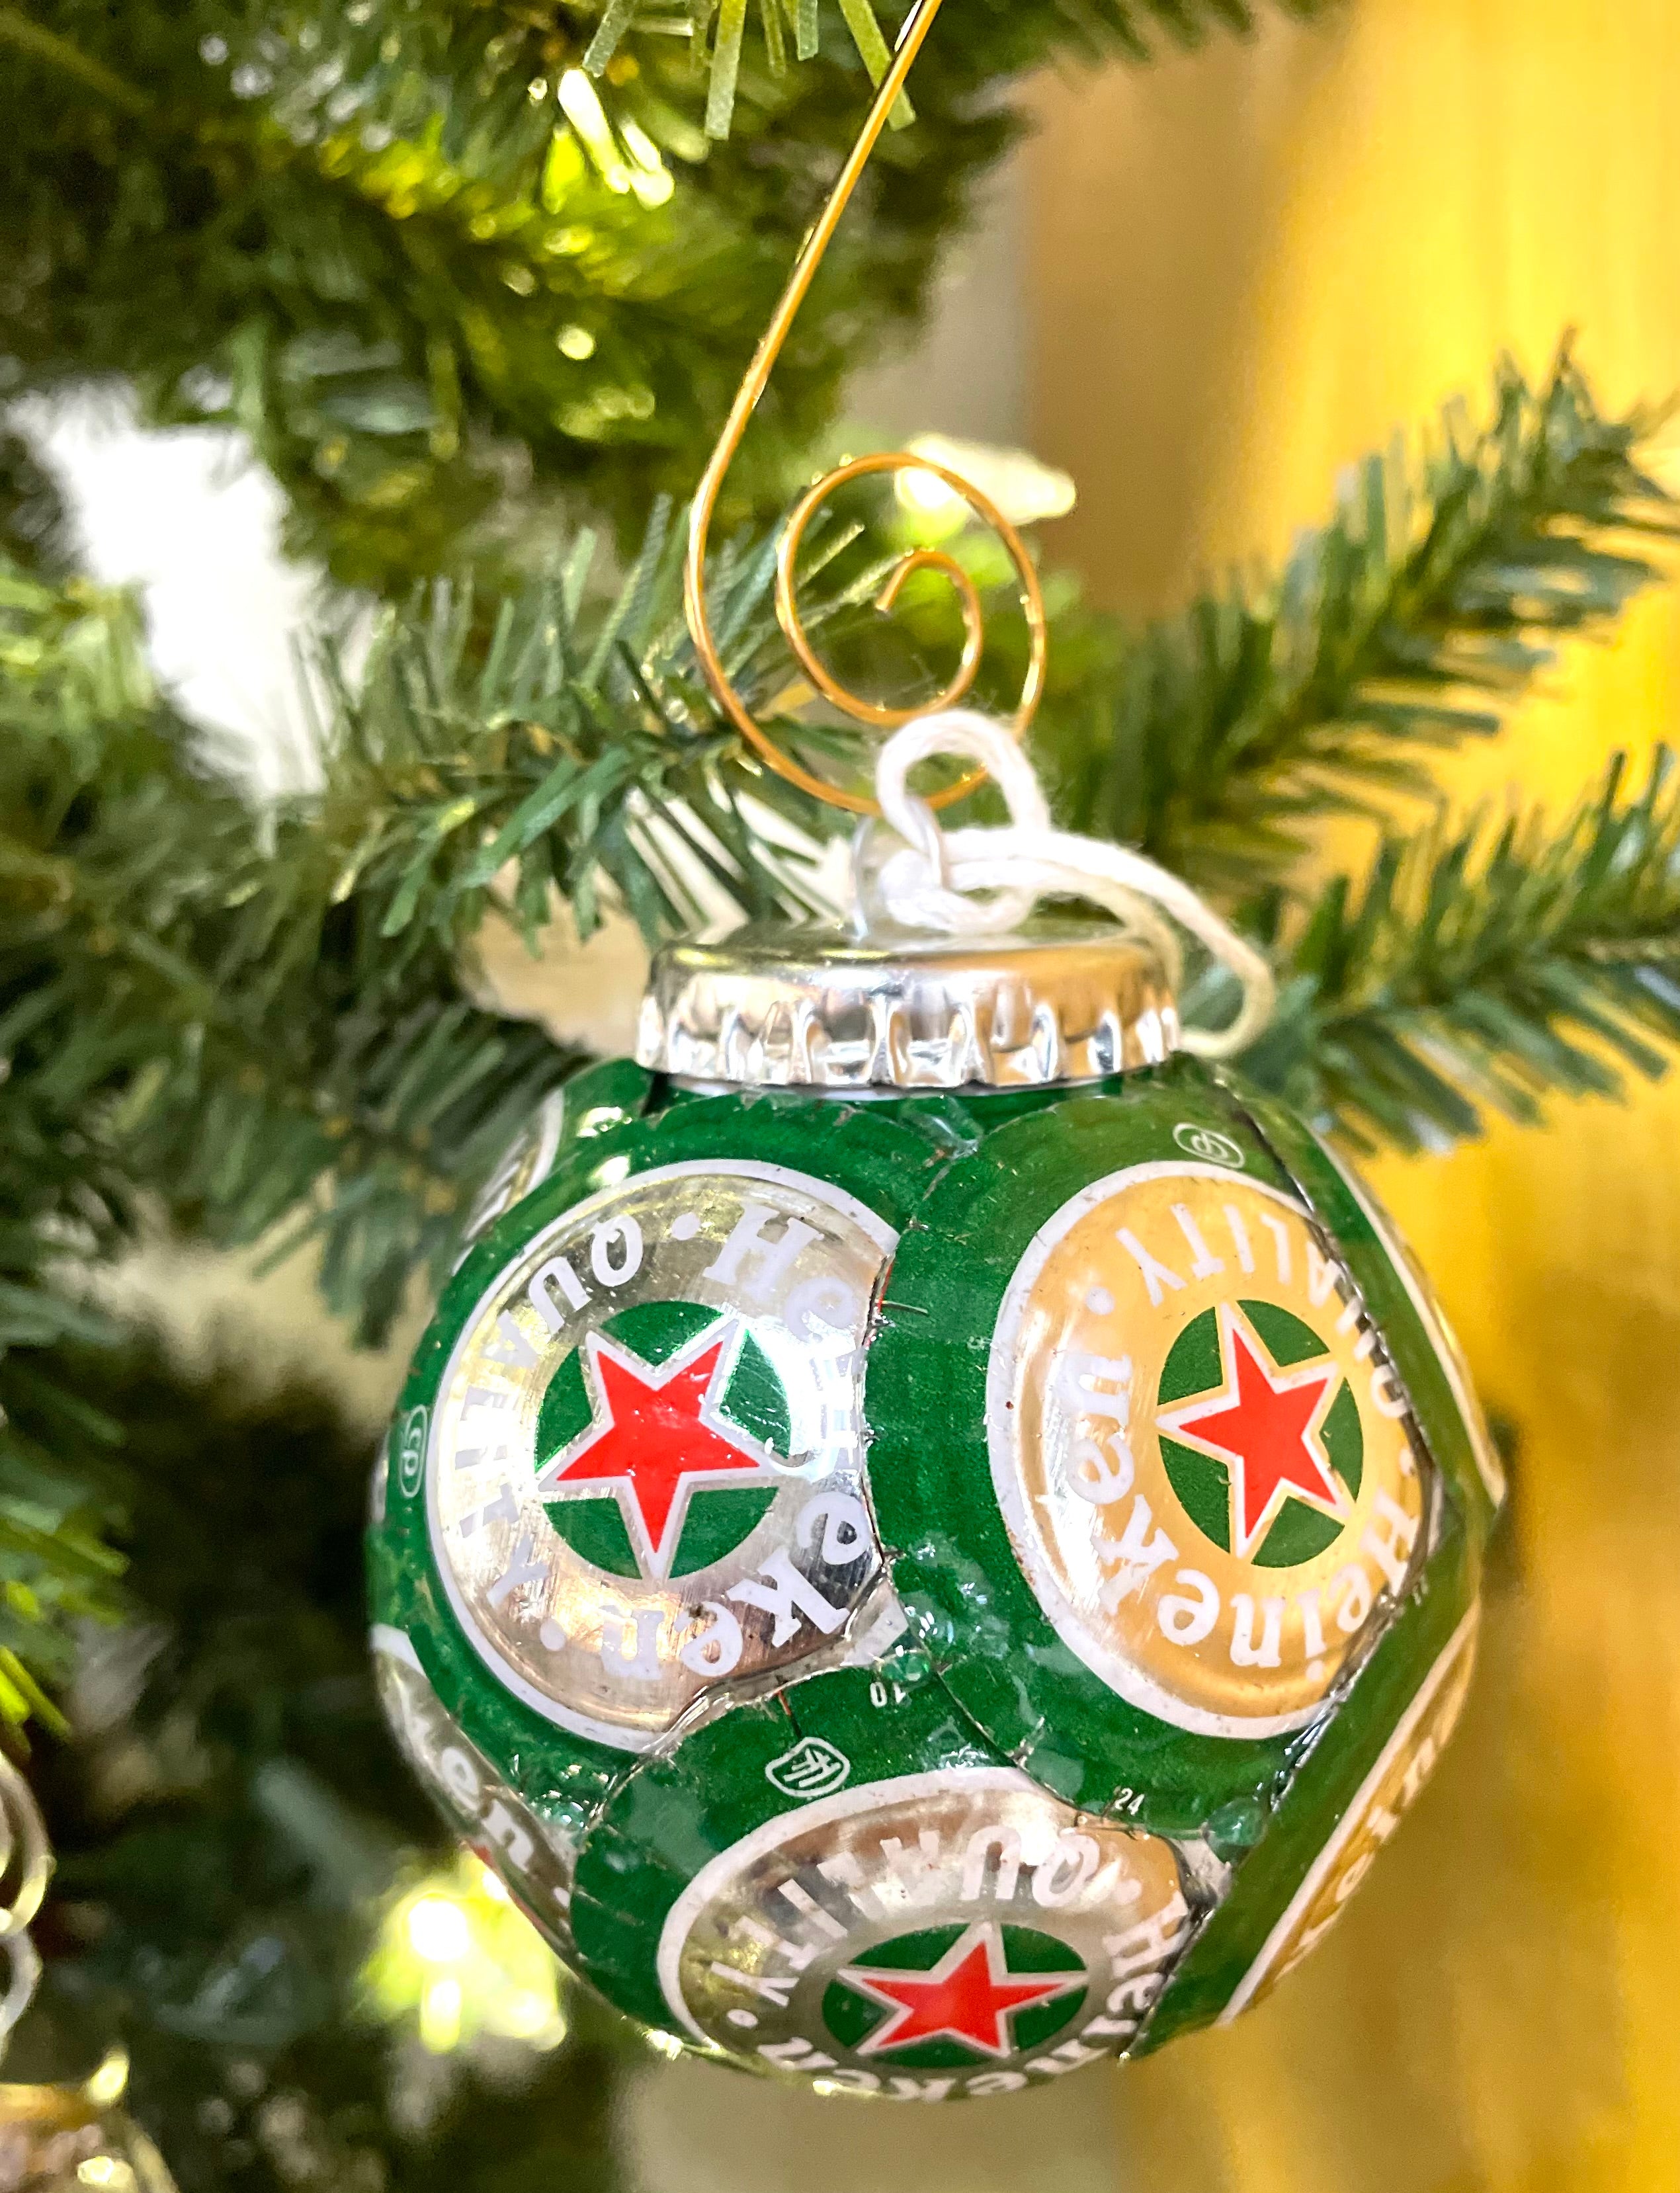 Heineken Bottle Cap Ornament